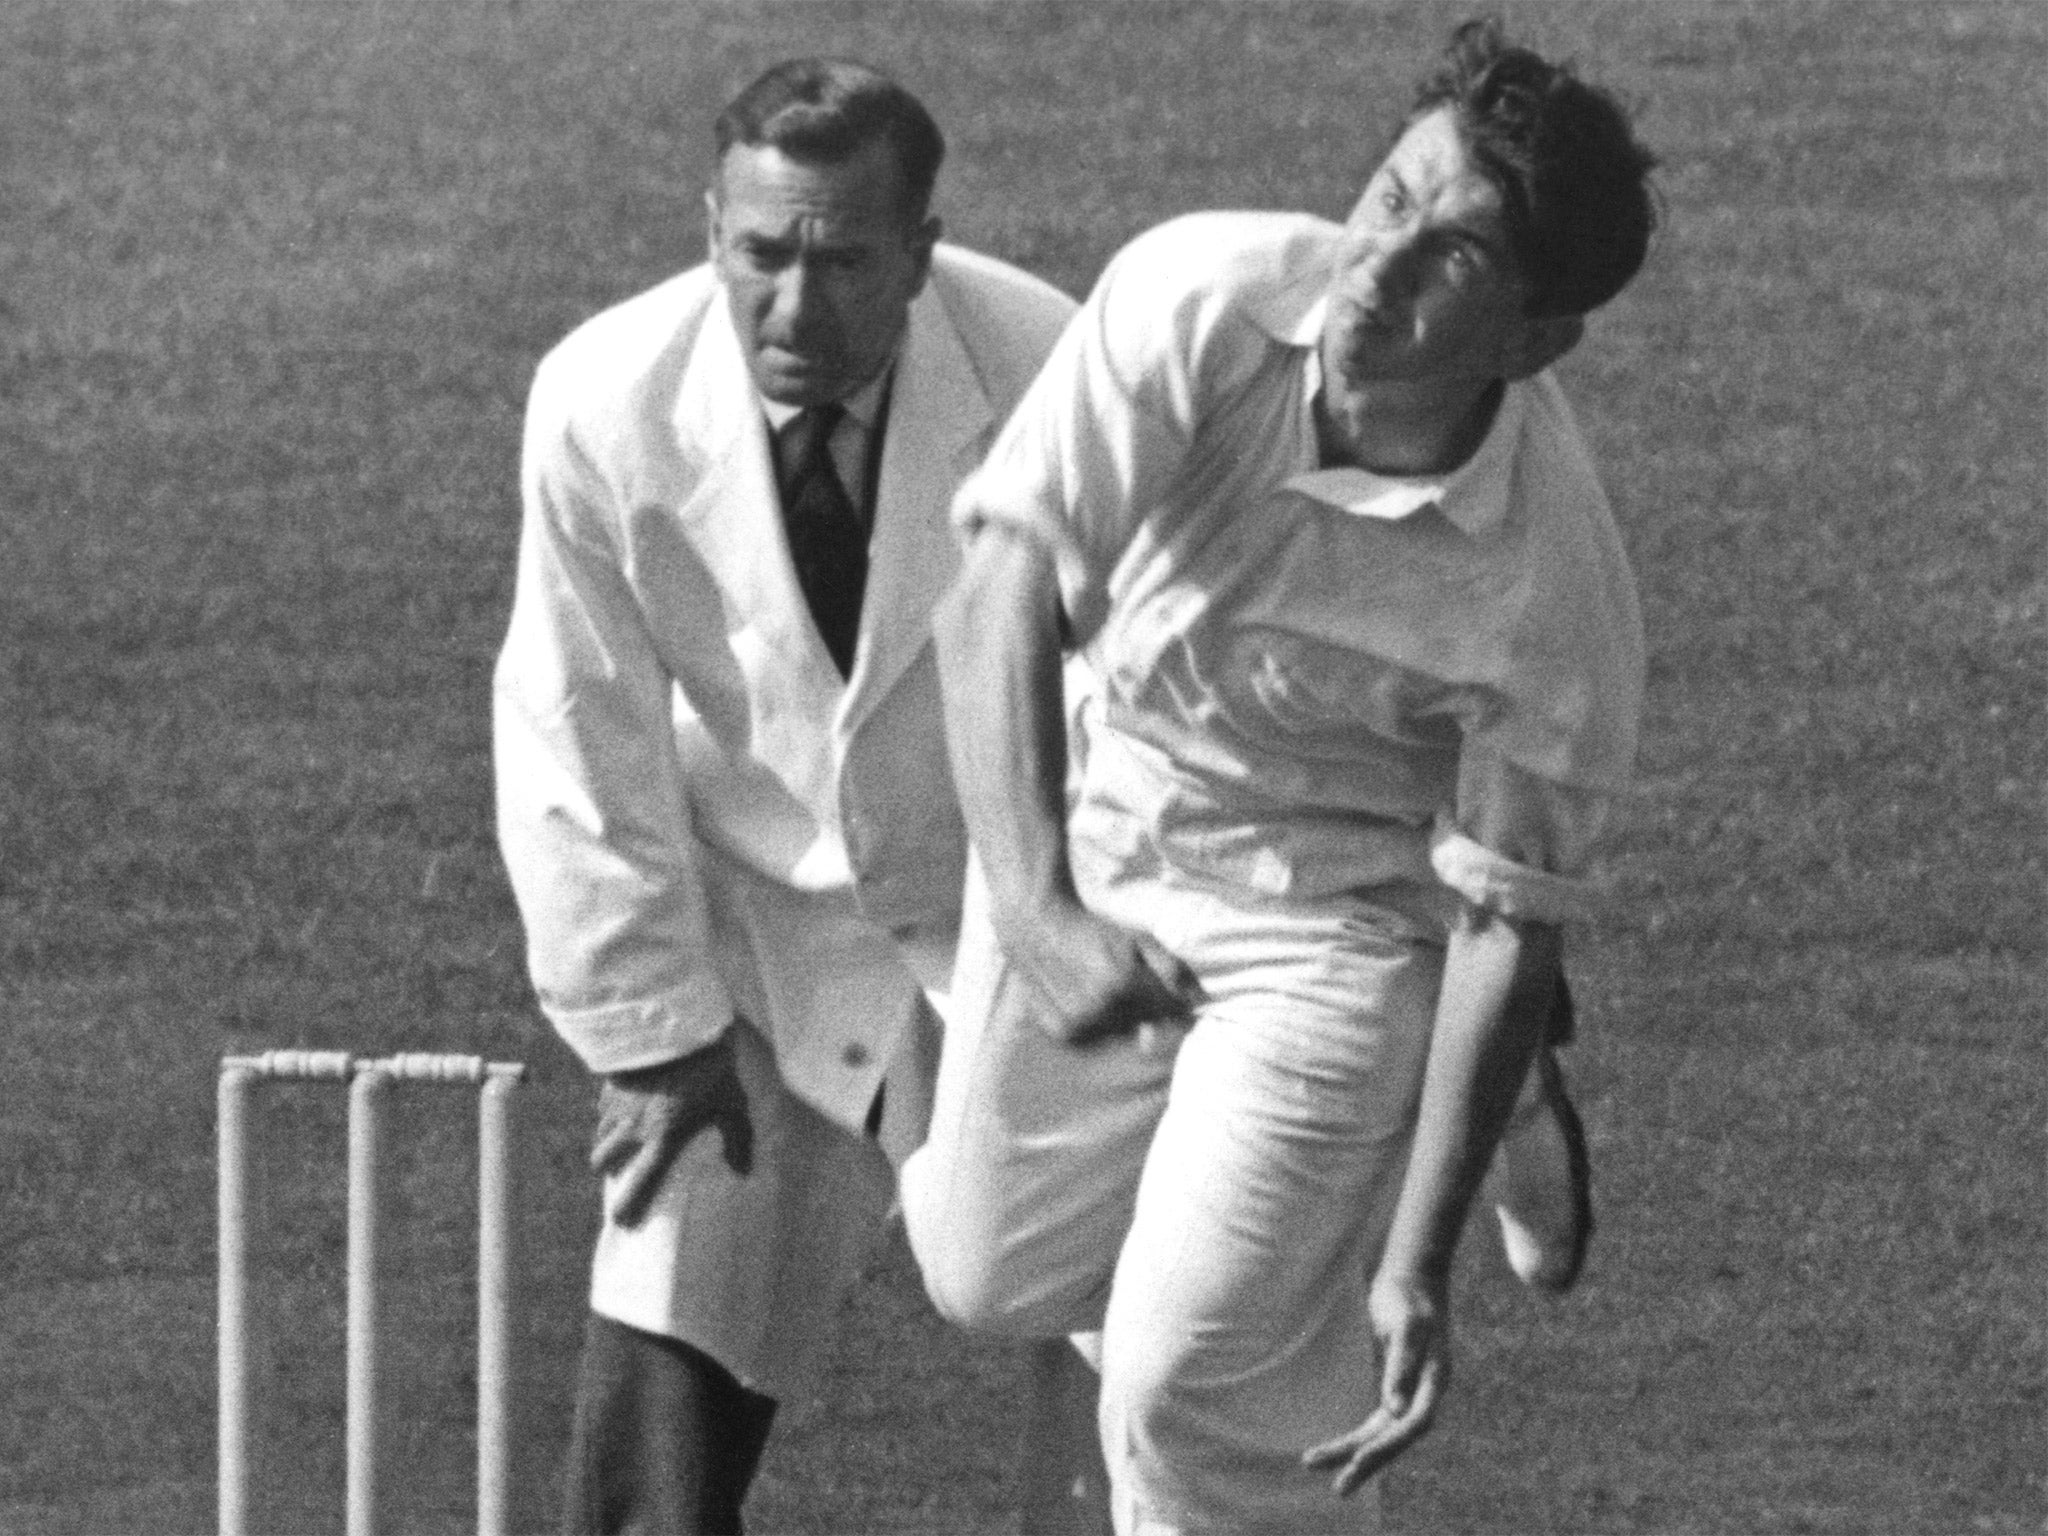 Cricketing great: Allen in action in 1961